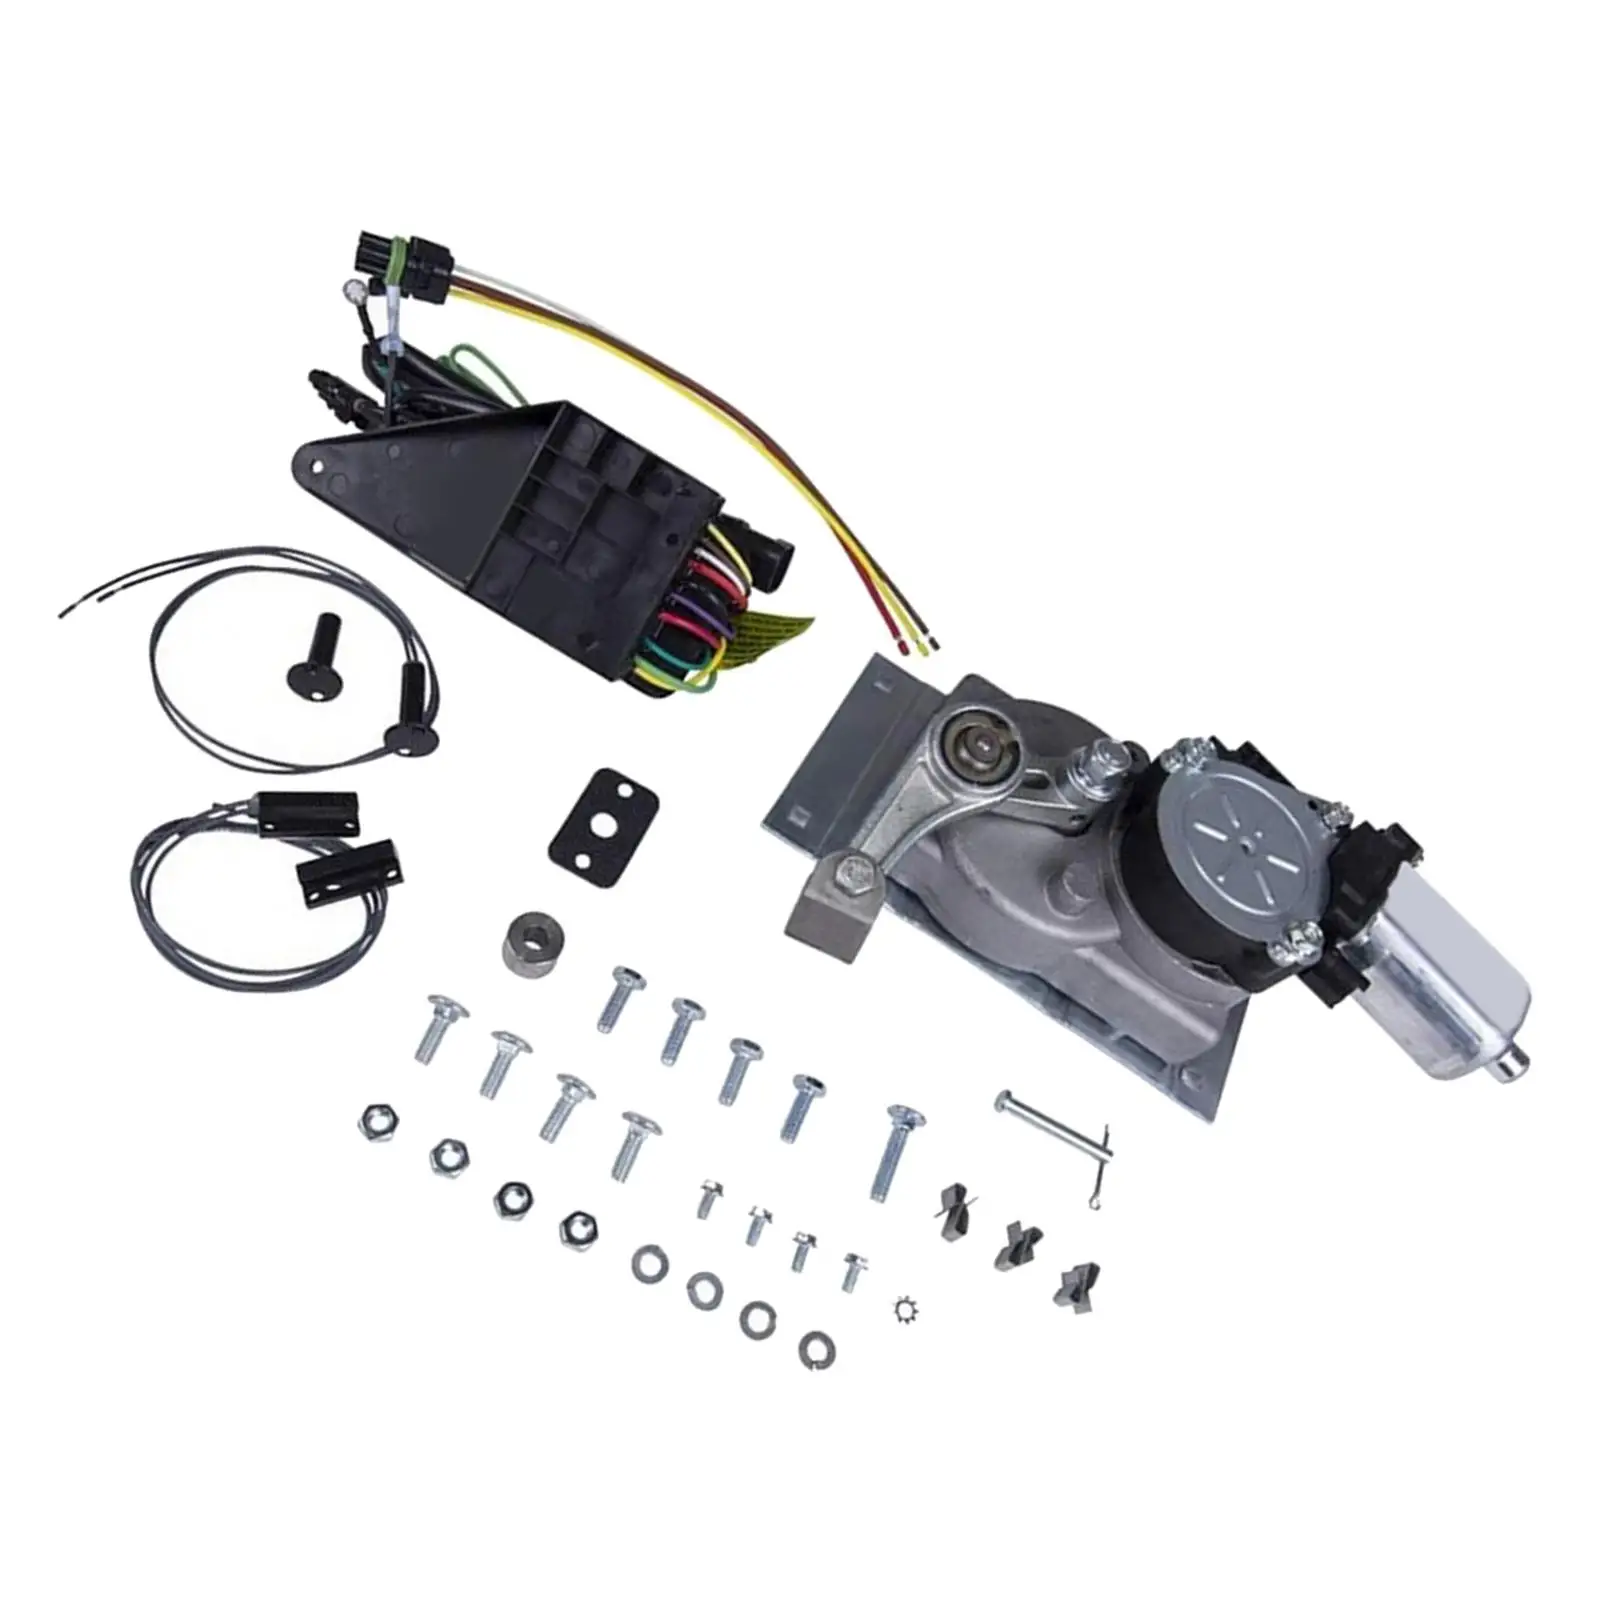 RV Step Motor Replacement Motor Conversion Kit for Motorhomes B Linkage